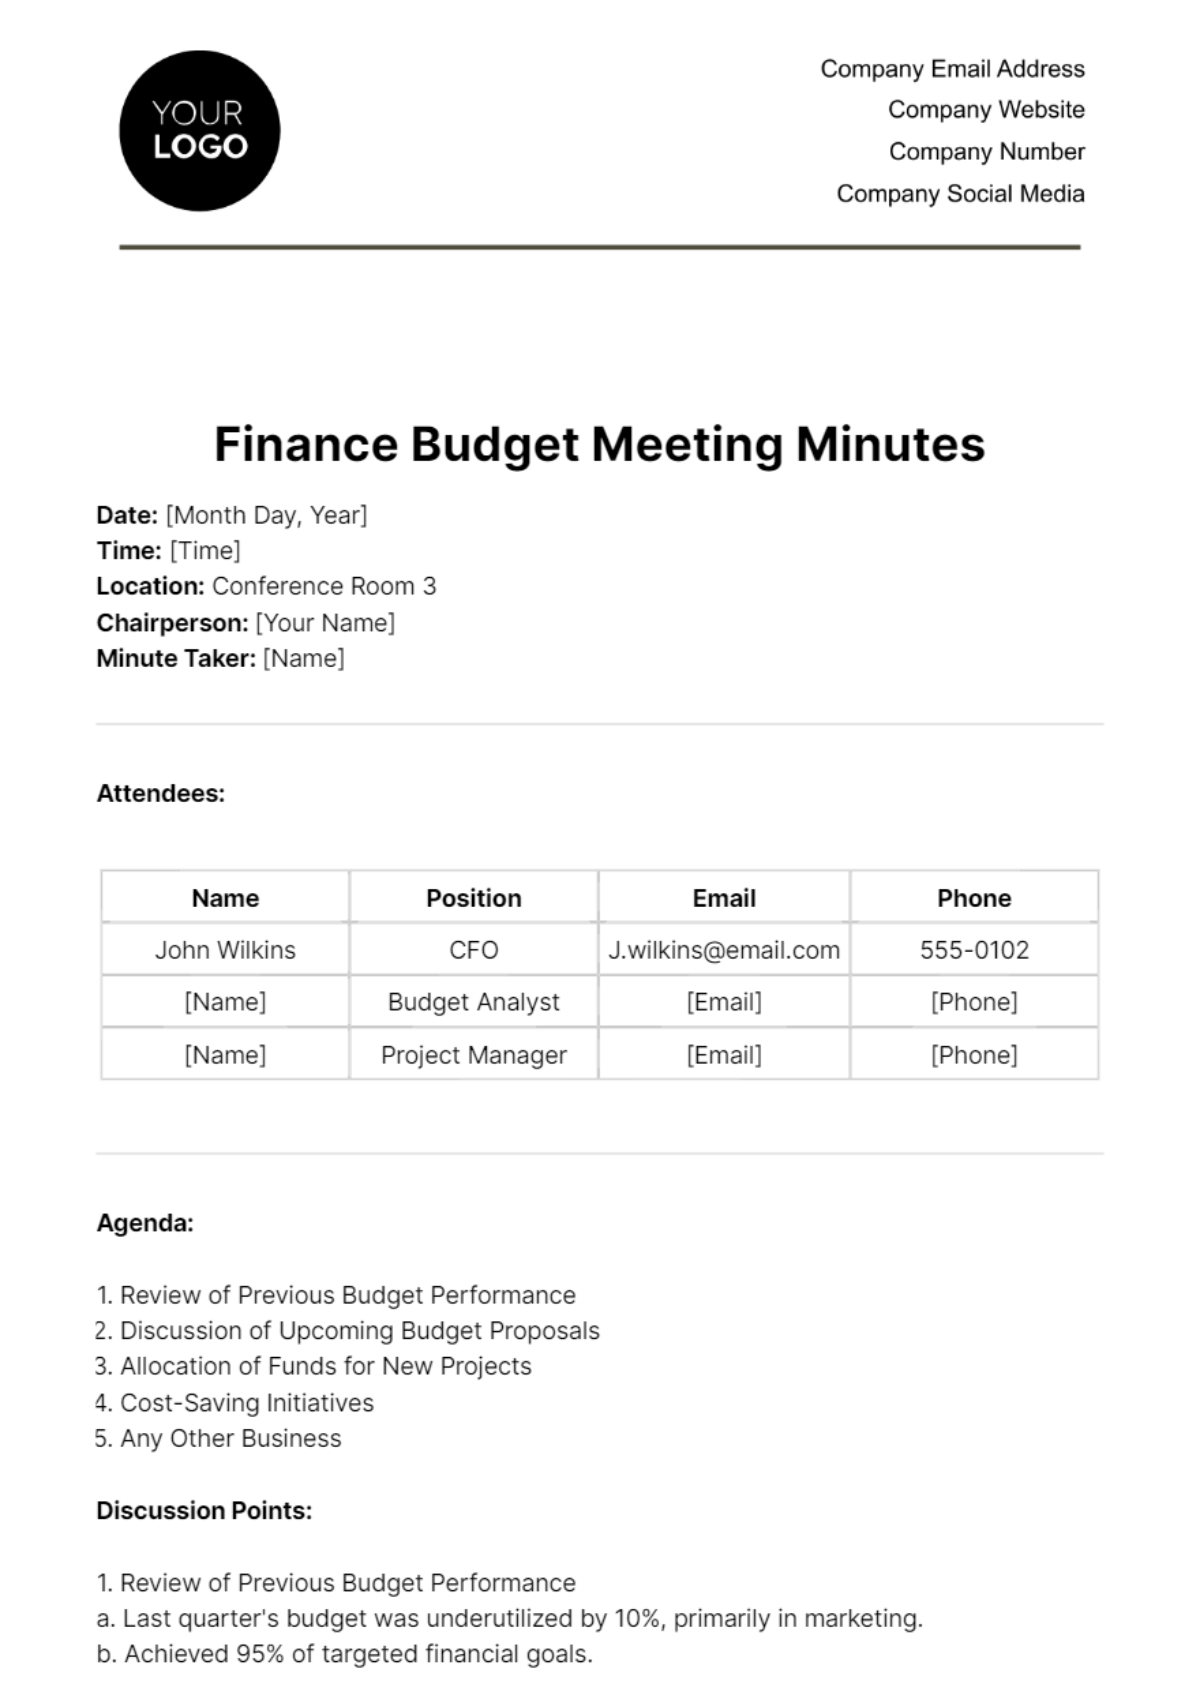 Finance Budget Meeting Minute Template